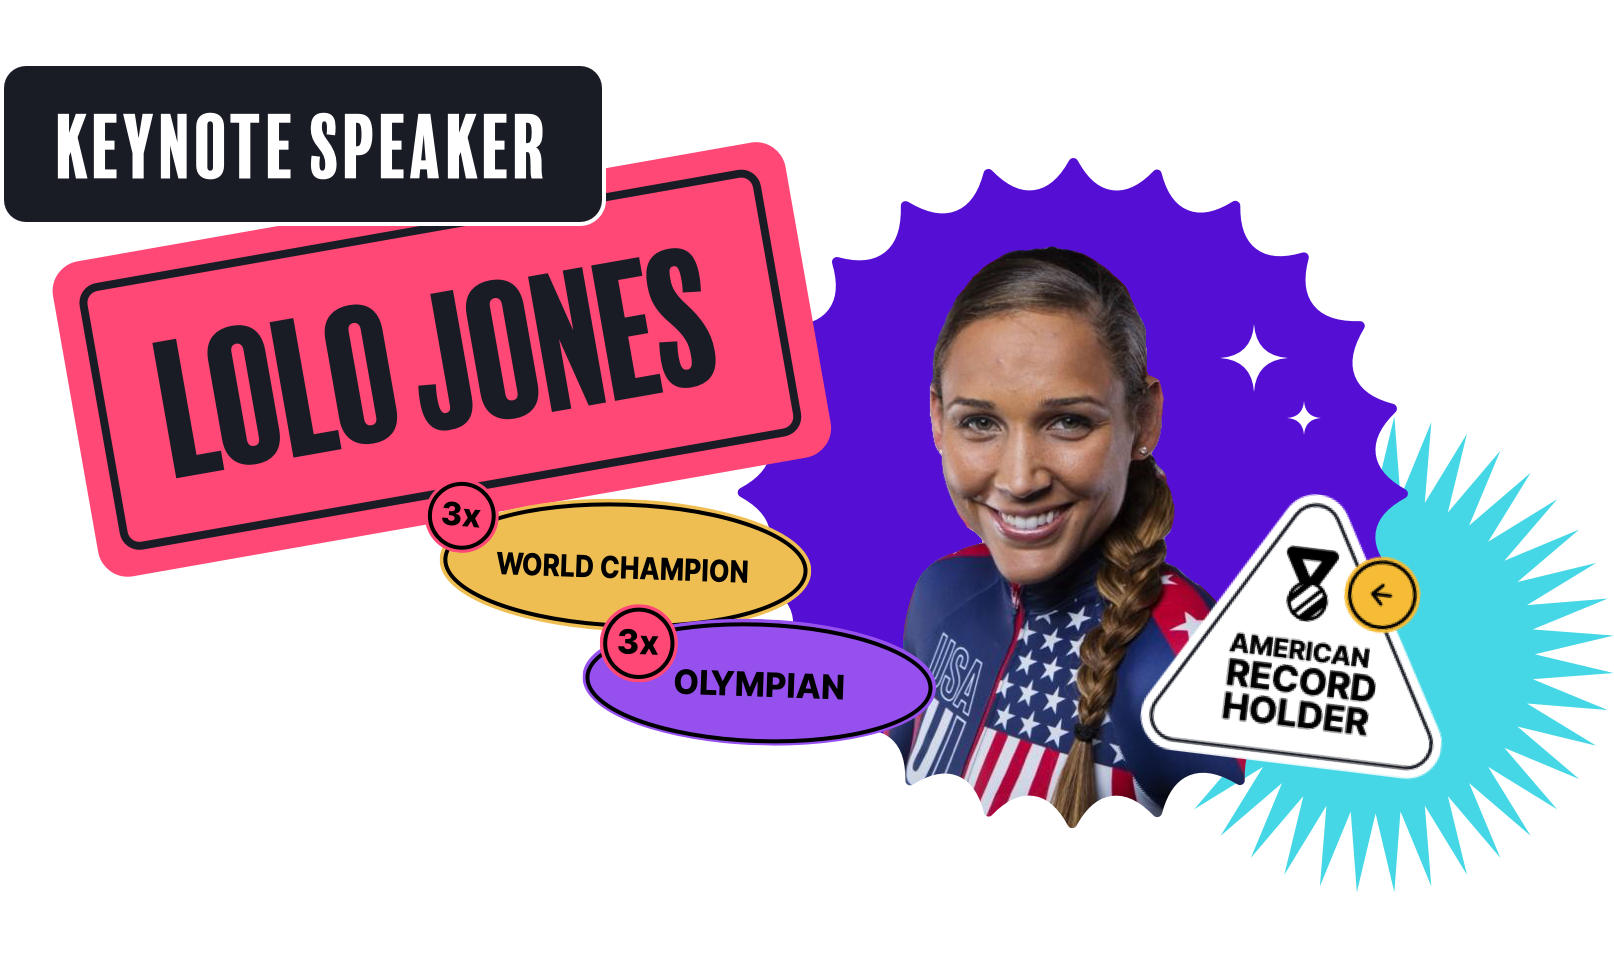 Keynote speaker - Lolo Jones | 3x World champion | 3x Olympian | American record holder